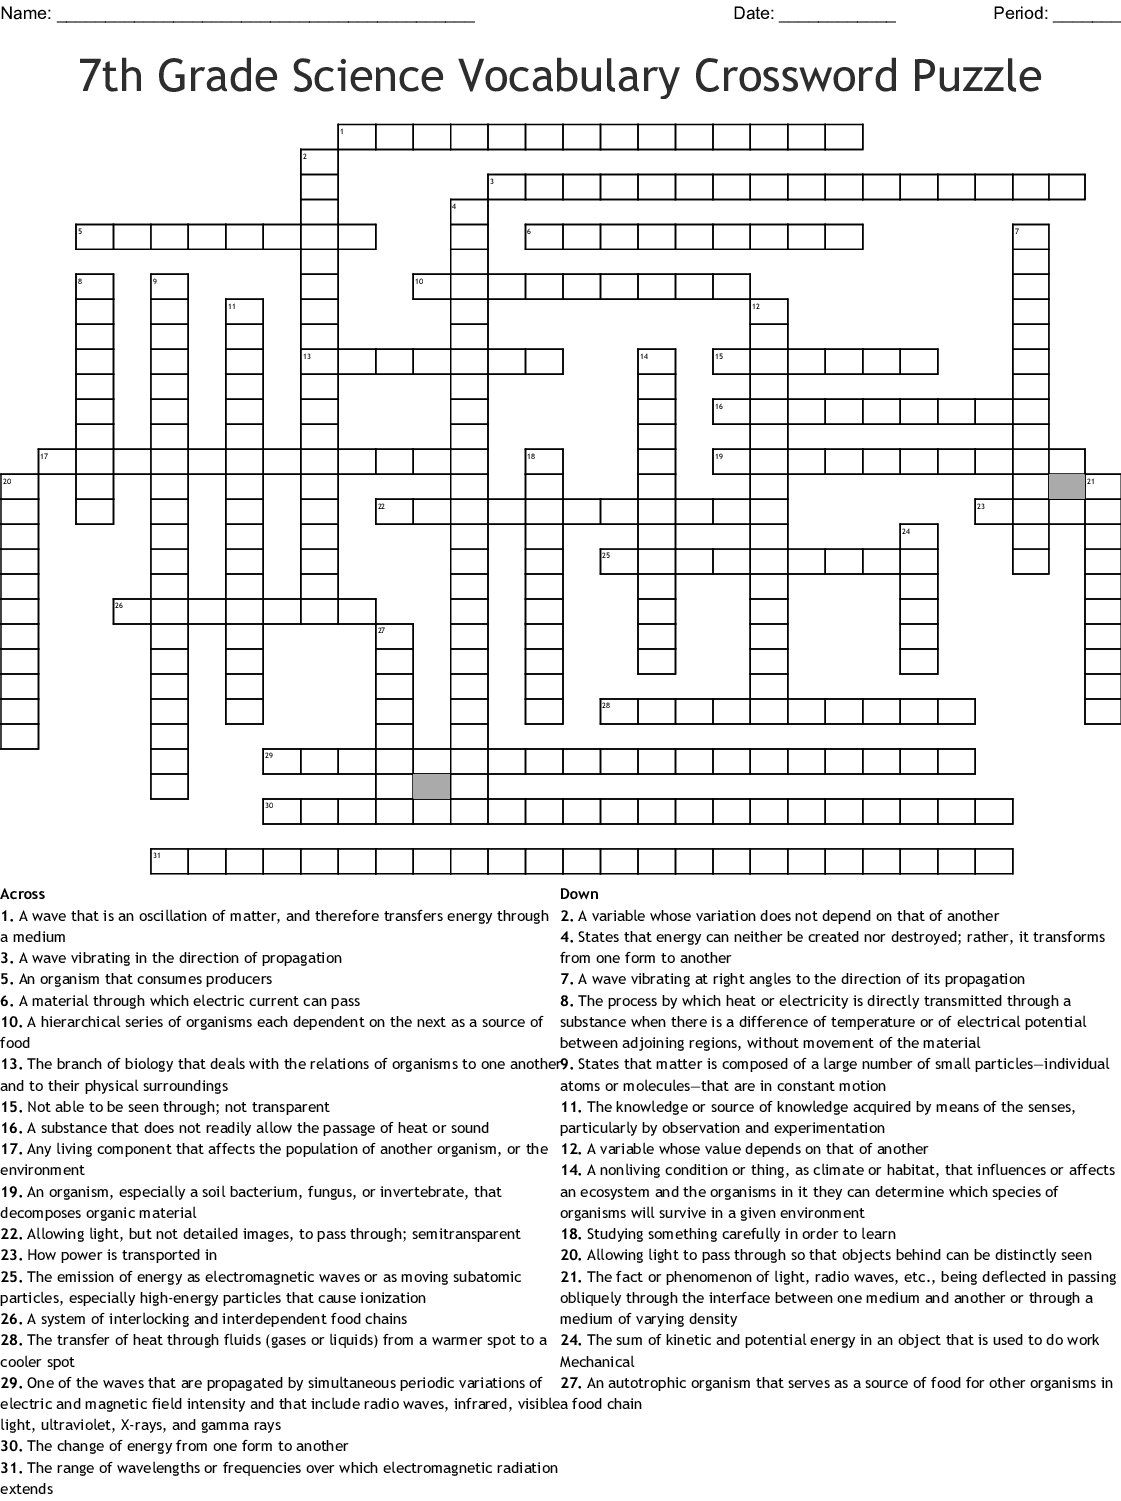 7Th Grade Science Vocabulary Crossword Puzzle Crossword - Wordmint - Crossword Puzzles Printable 7Th Grade